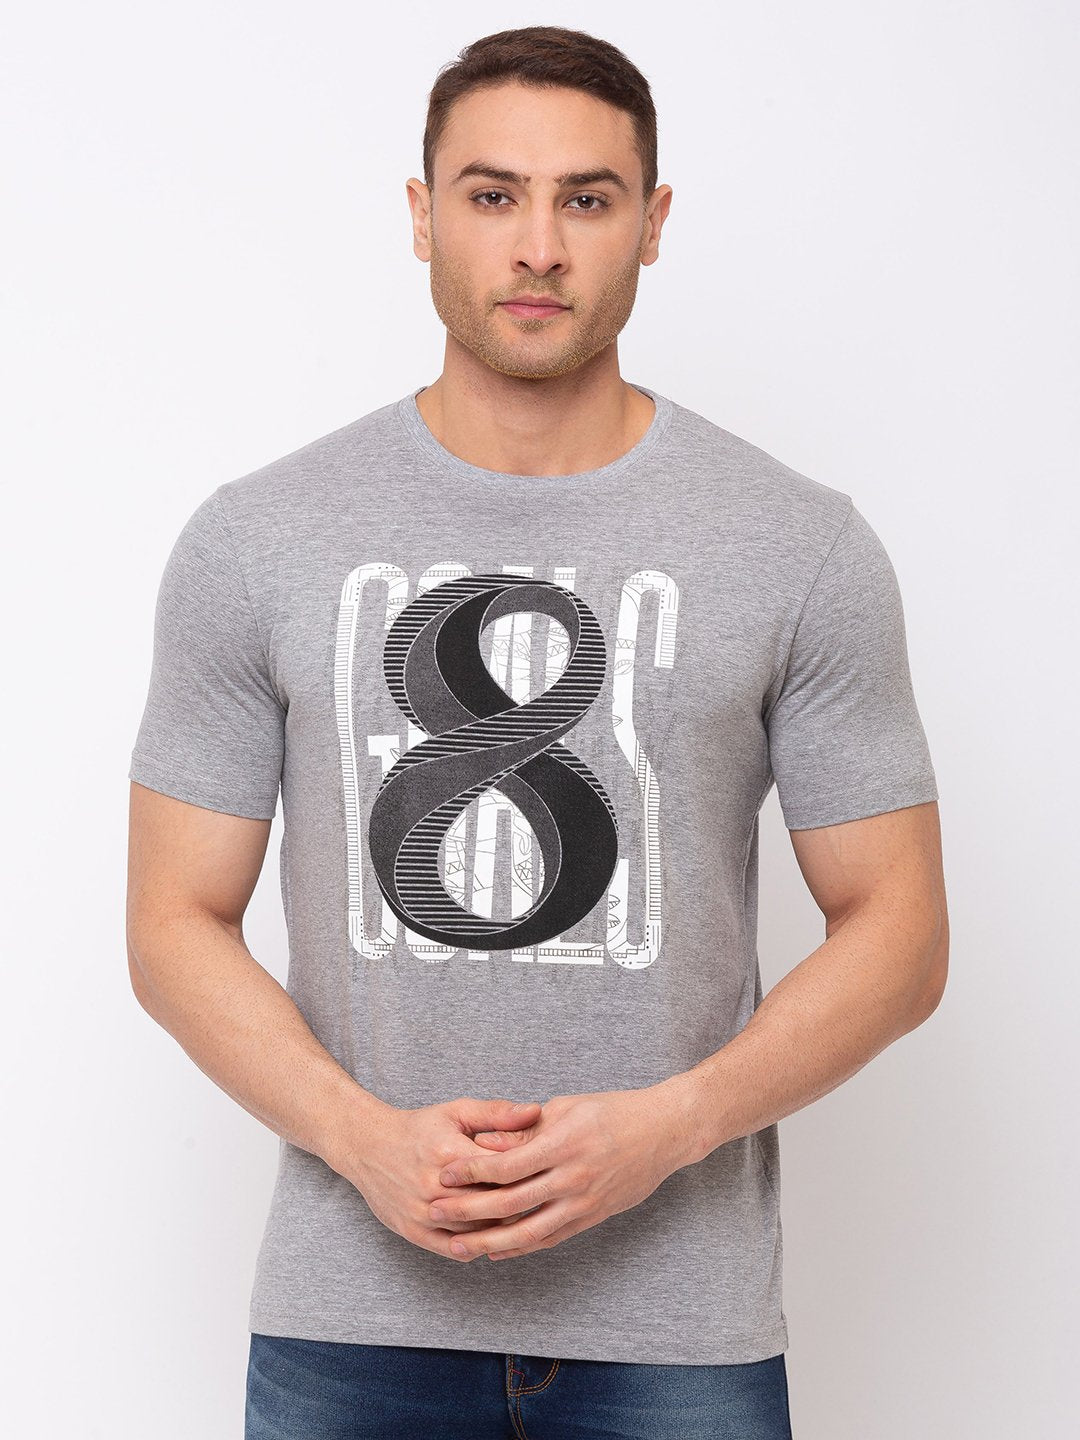 Status Quo |Chest Print Round Neck T-shirt with HD Print - M, L, XL, XXL